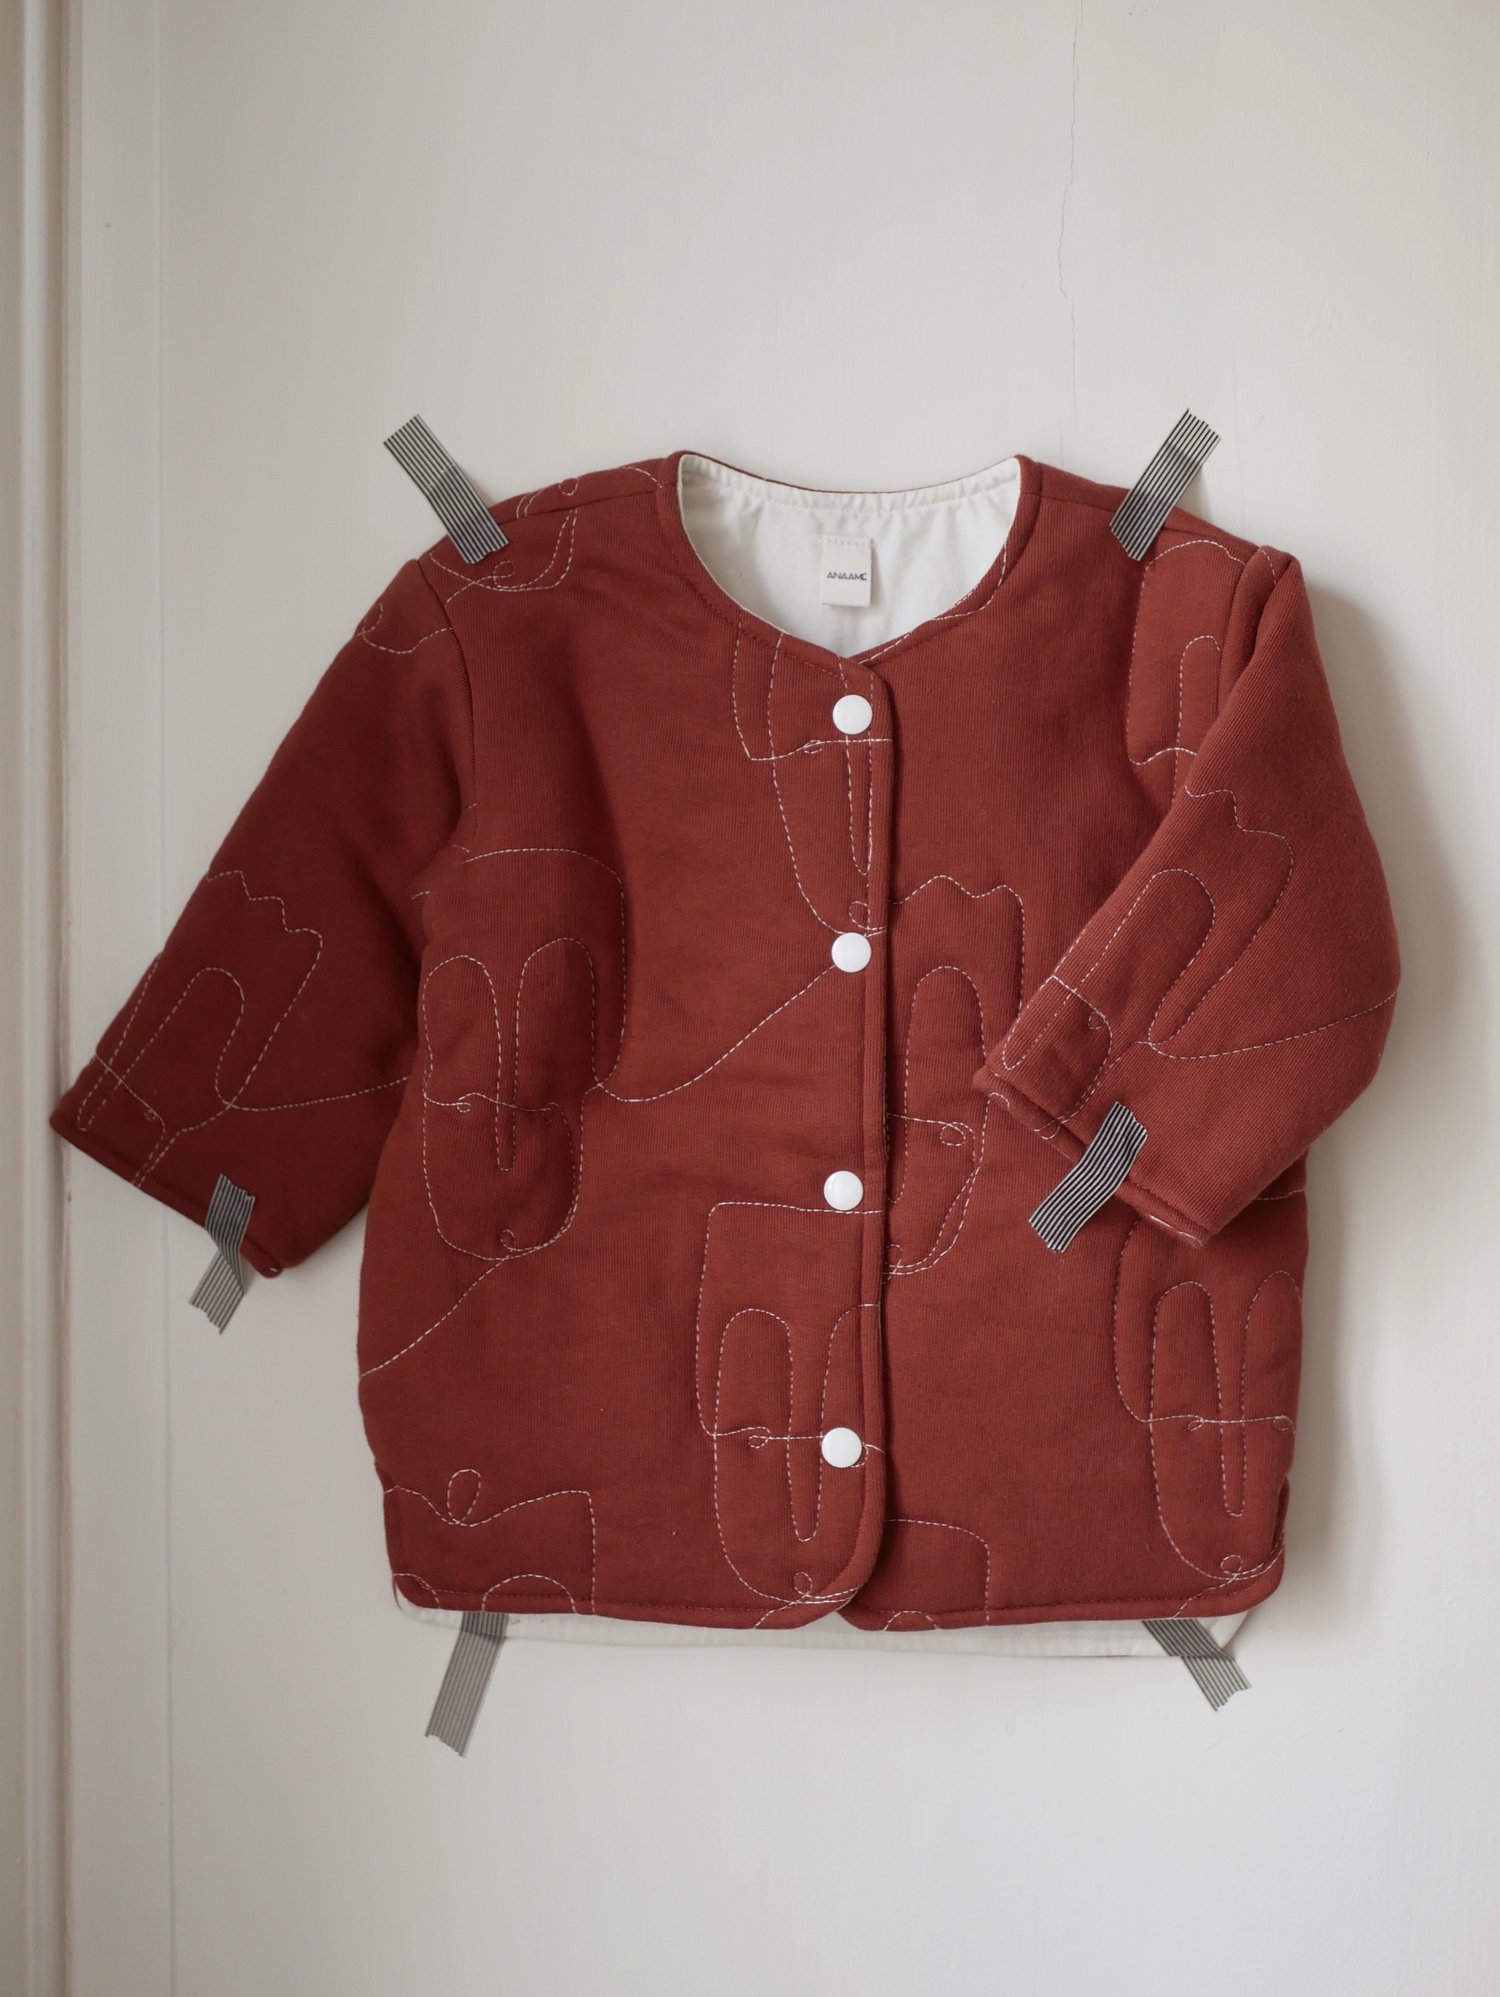 Image of Veste matelassée - rouille / Quilted jacket - rust